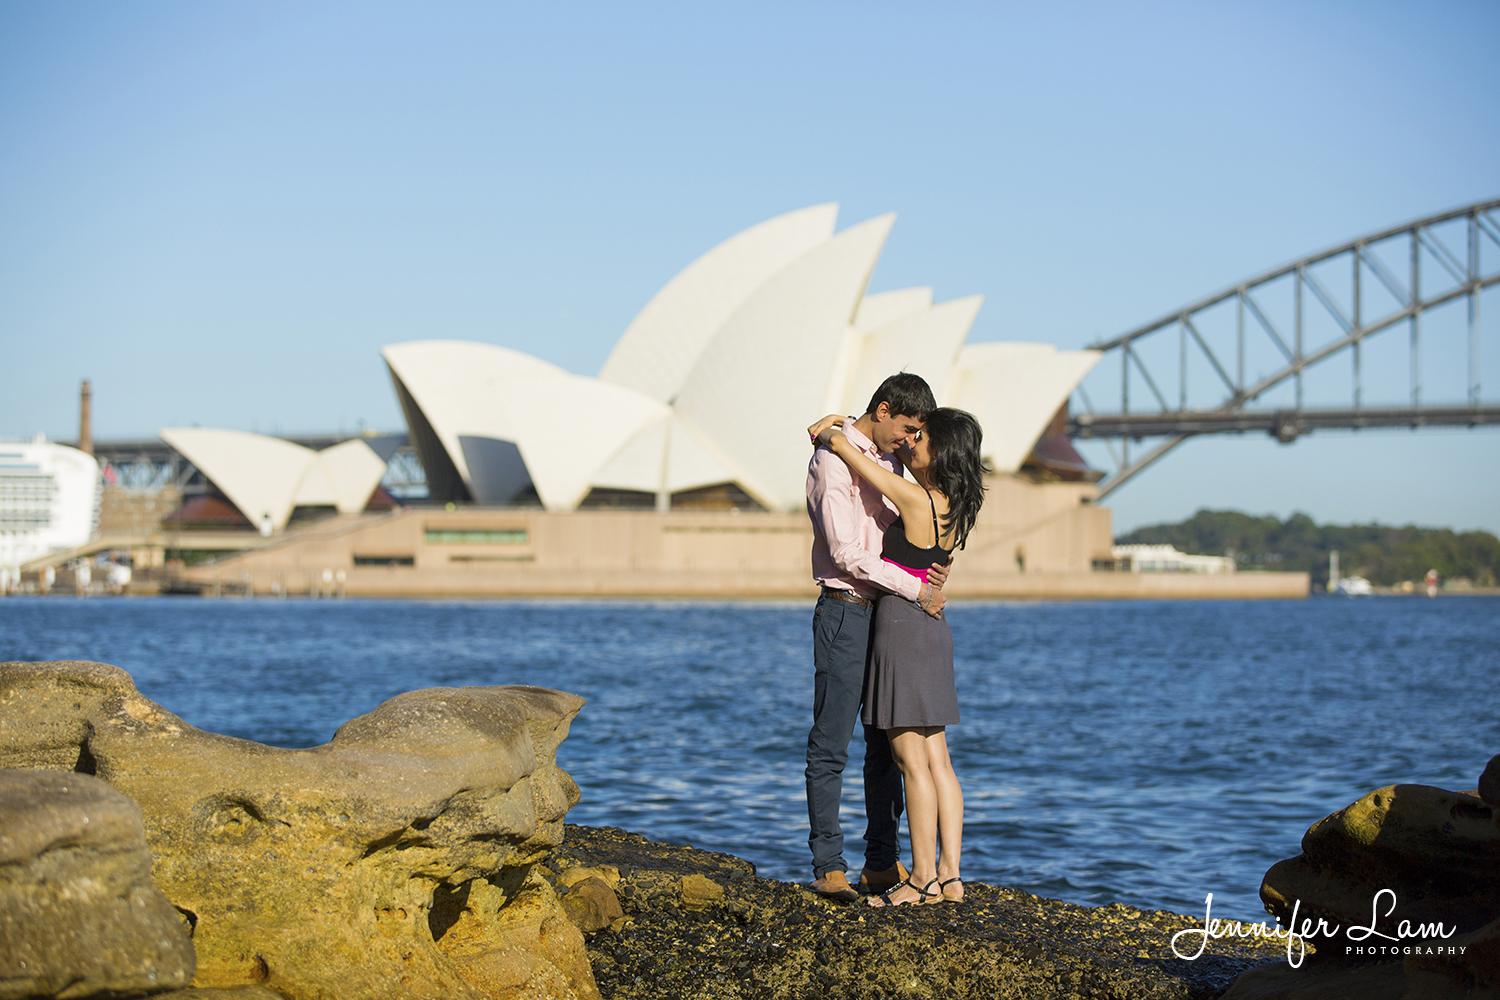 Couples Portrait Session - Jennifer Lam Photography - Sydney - Australia